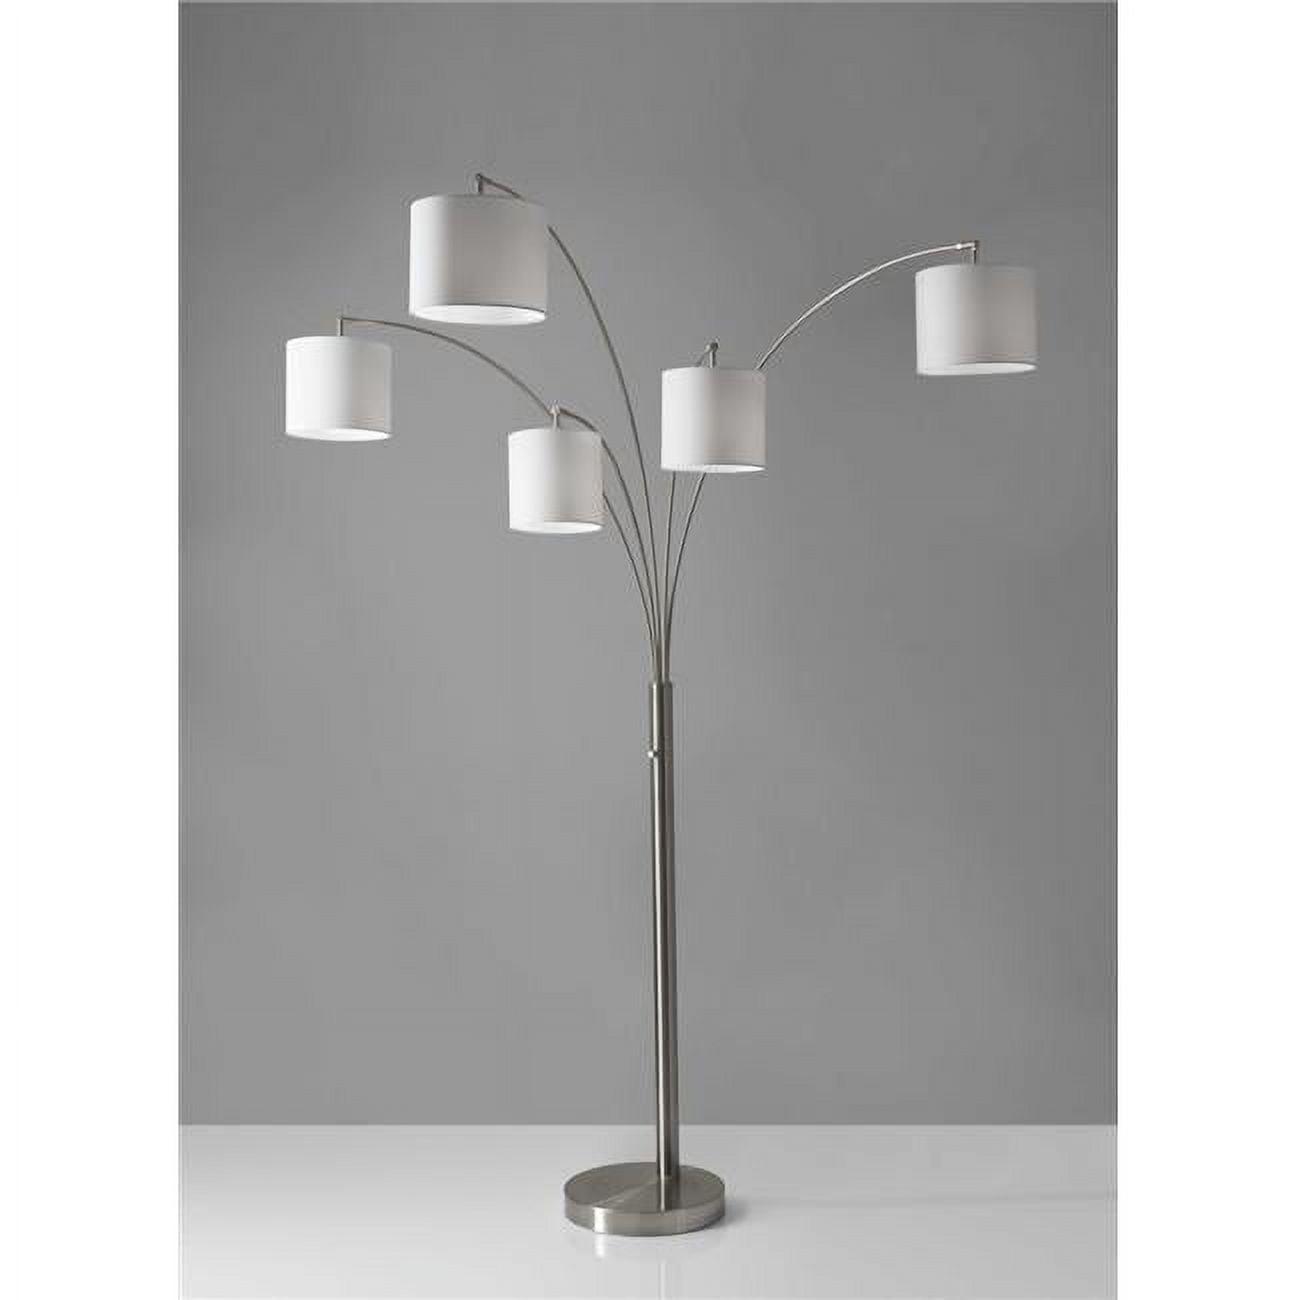 Elegant Brushed Steel 5-Arm Arc Floor Lamp with White Drum Shades